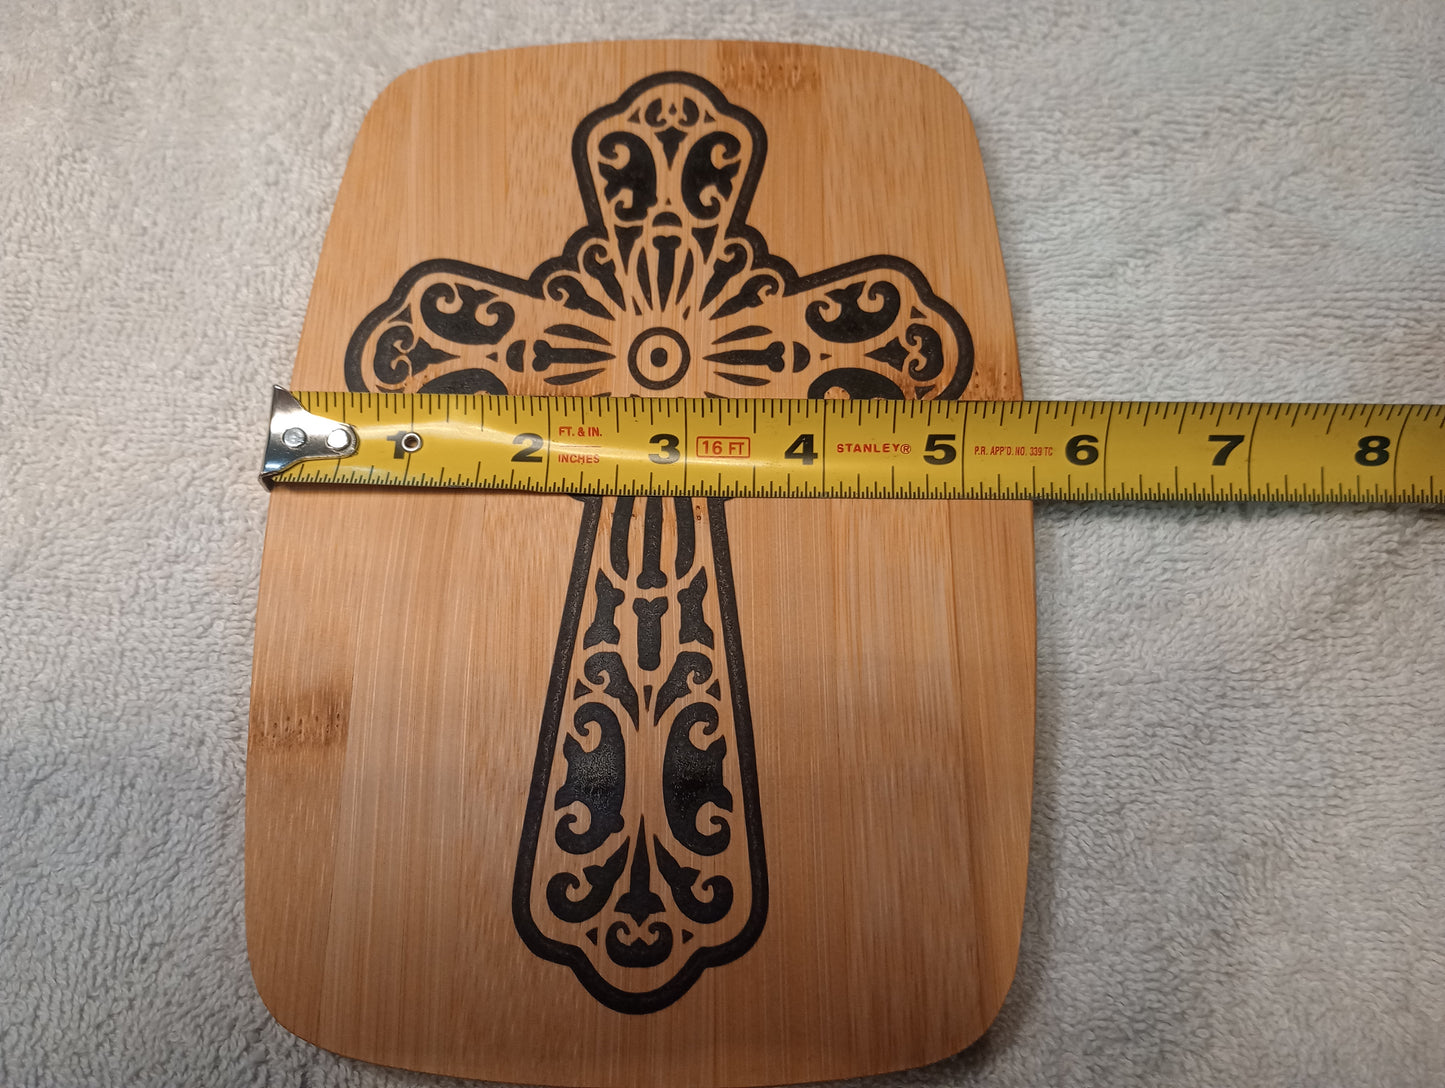 Bamboo cutting board with food grade epoxy inlays - fancy cross